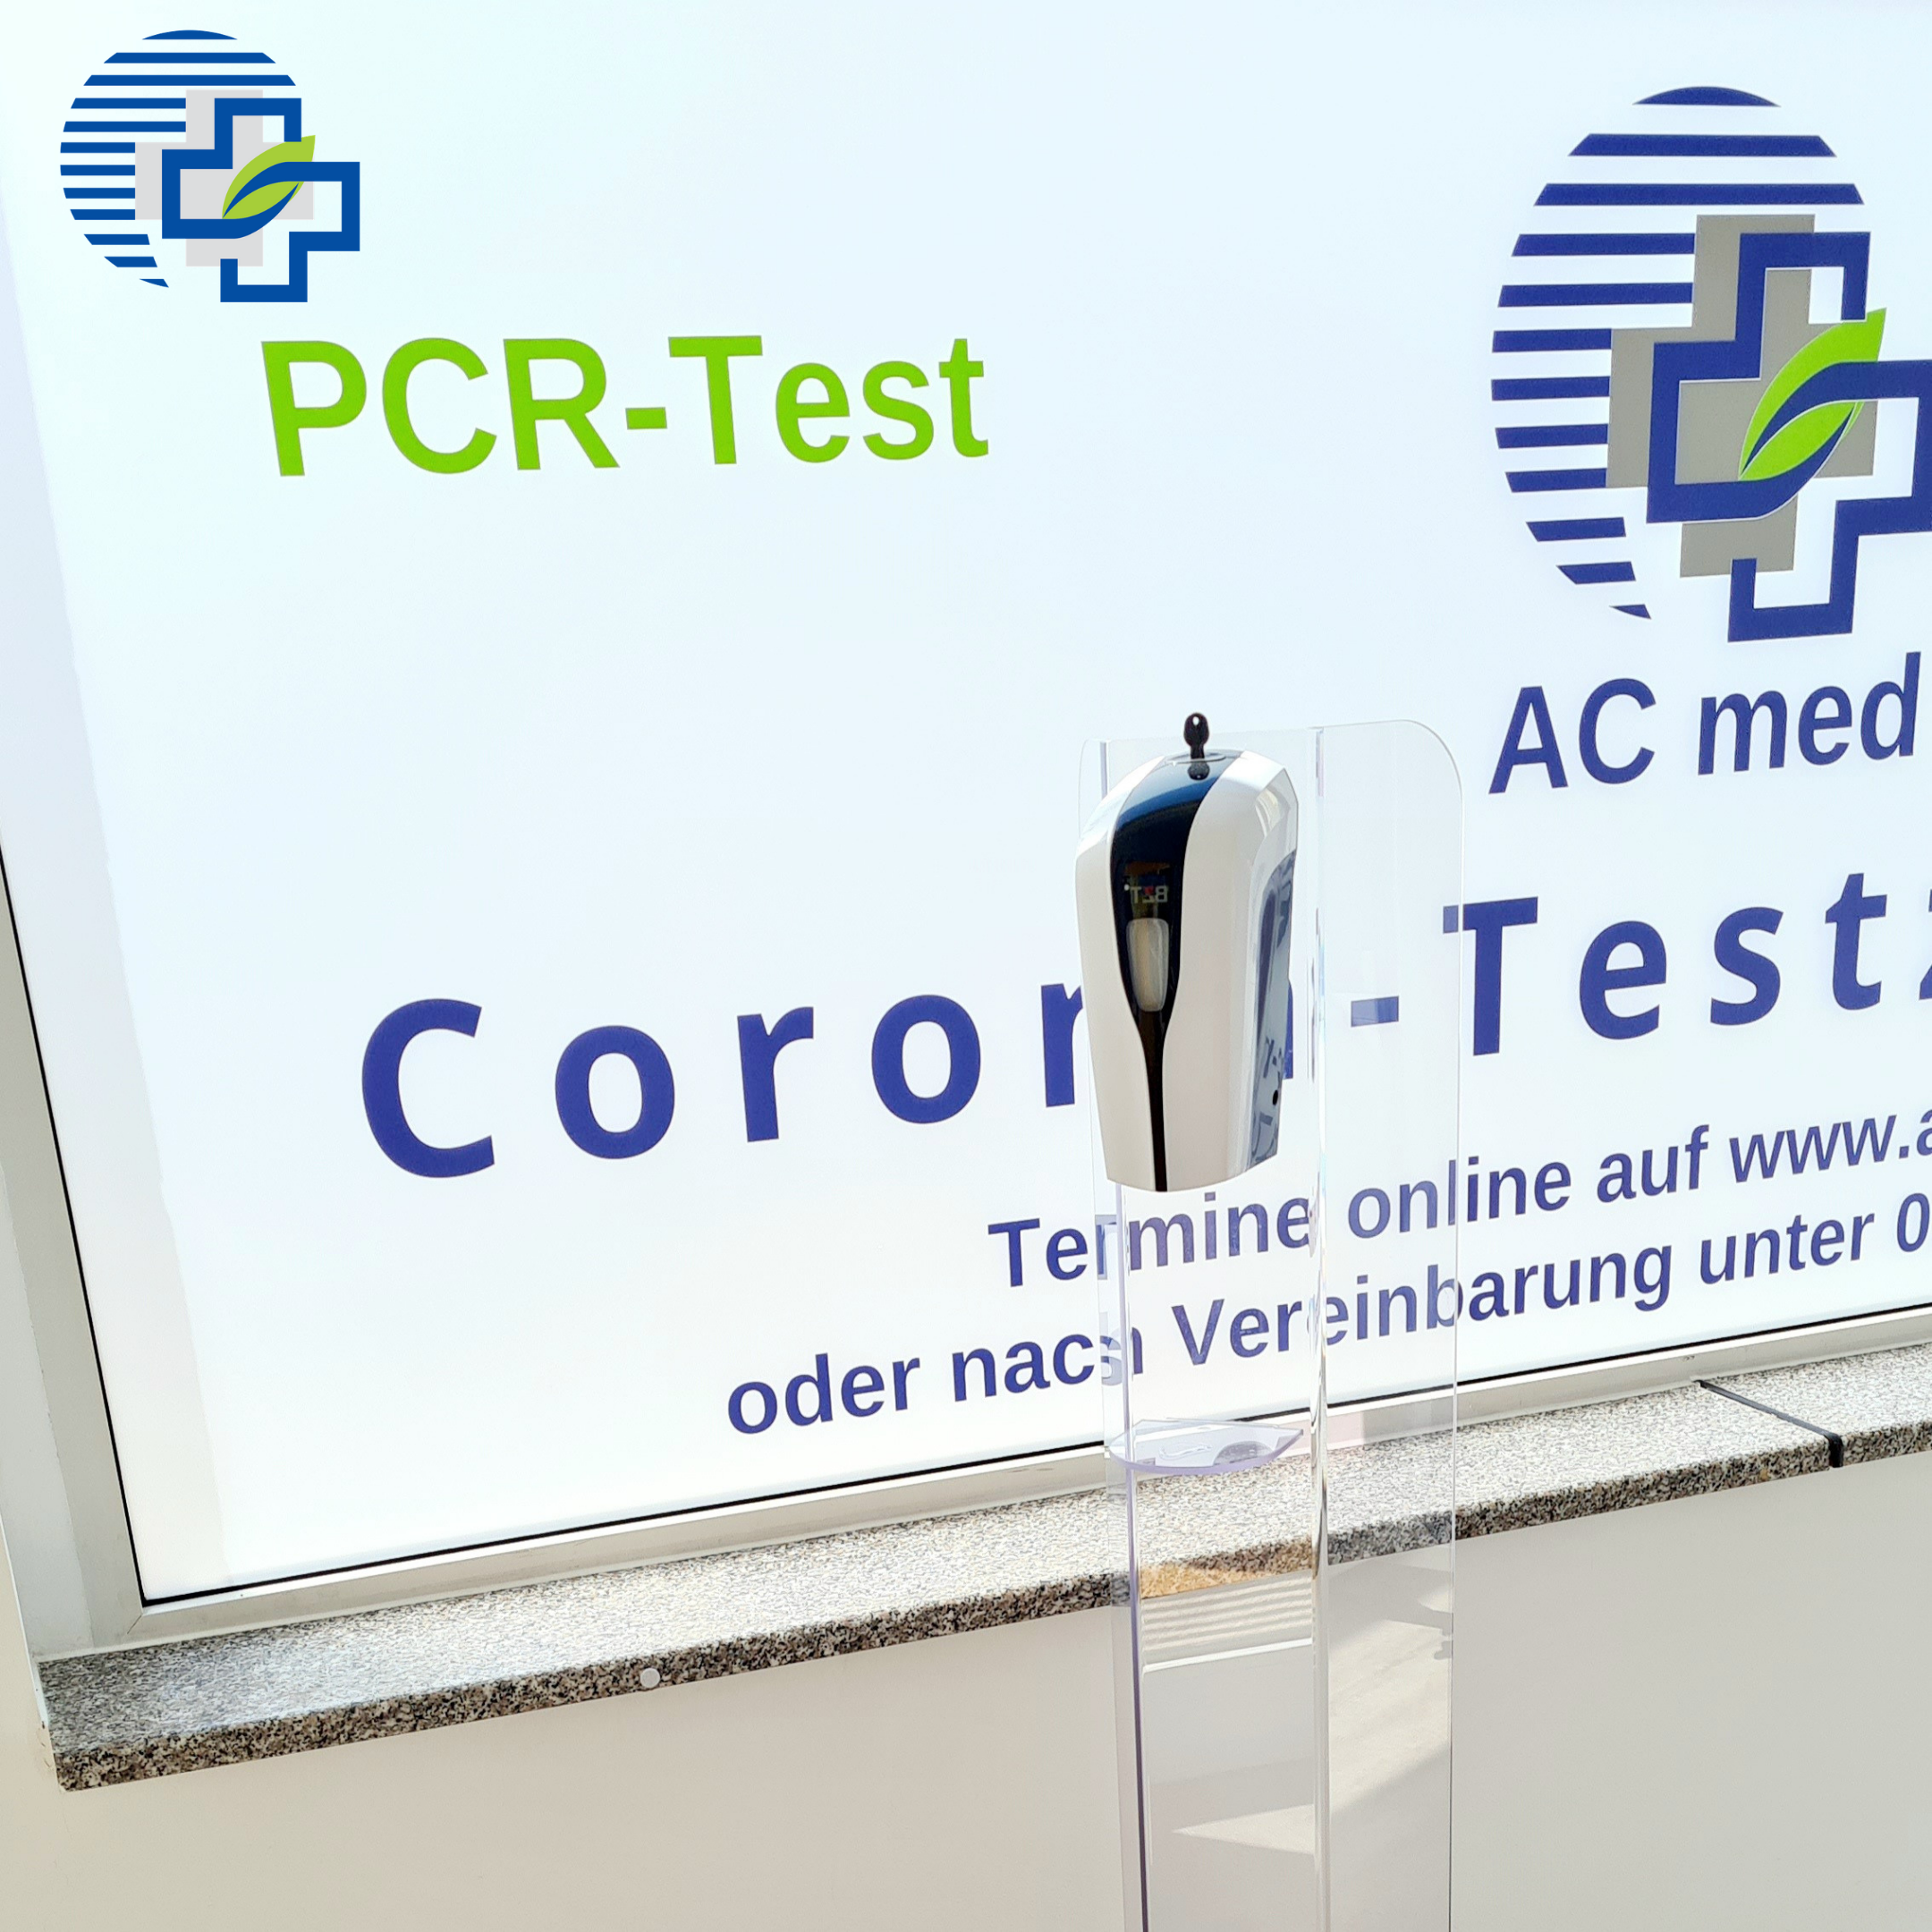 AC med Corona Testzentrum Hannover - Ablauf